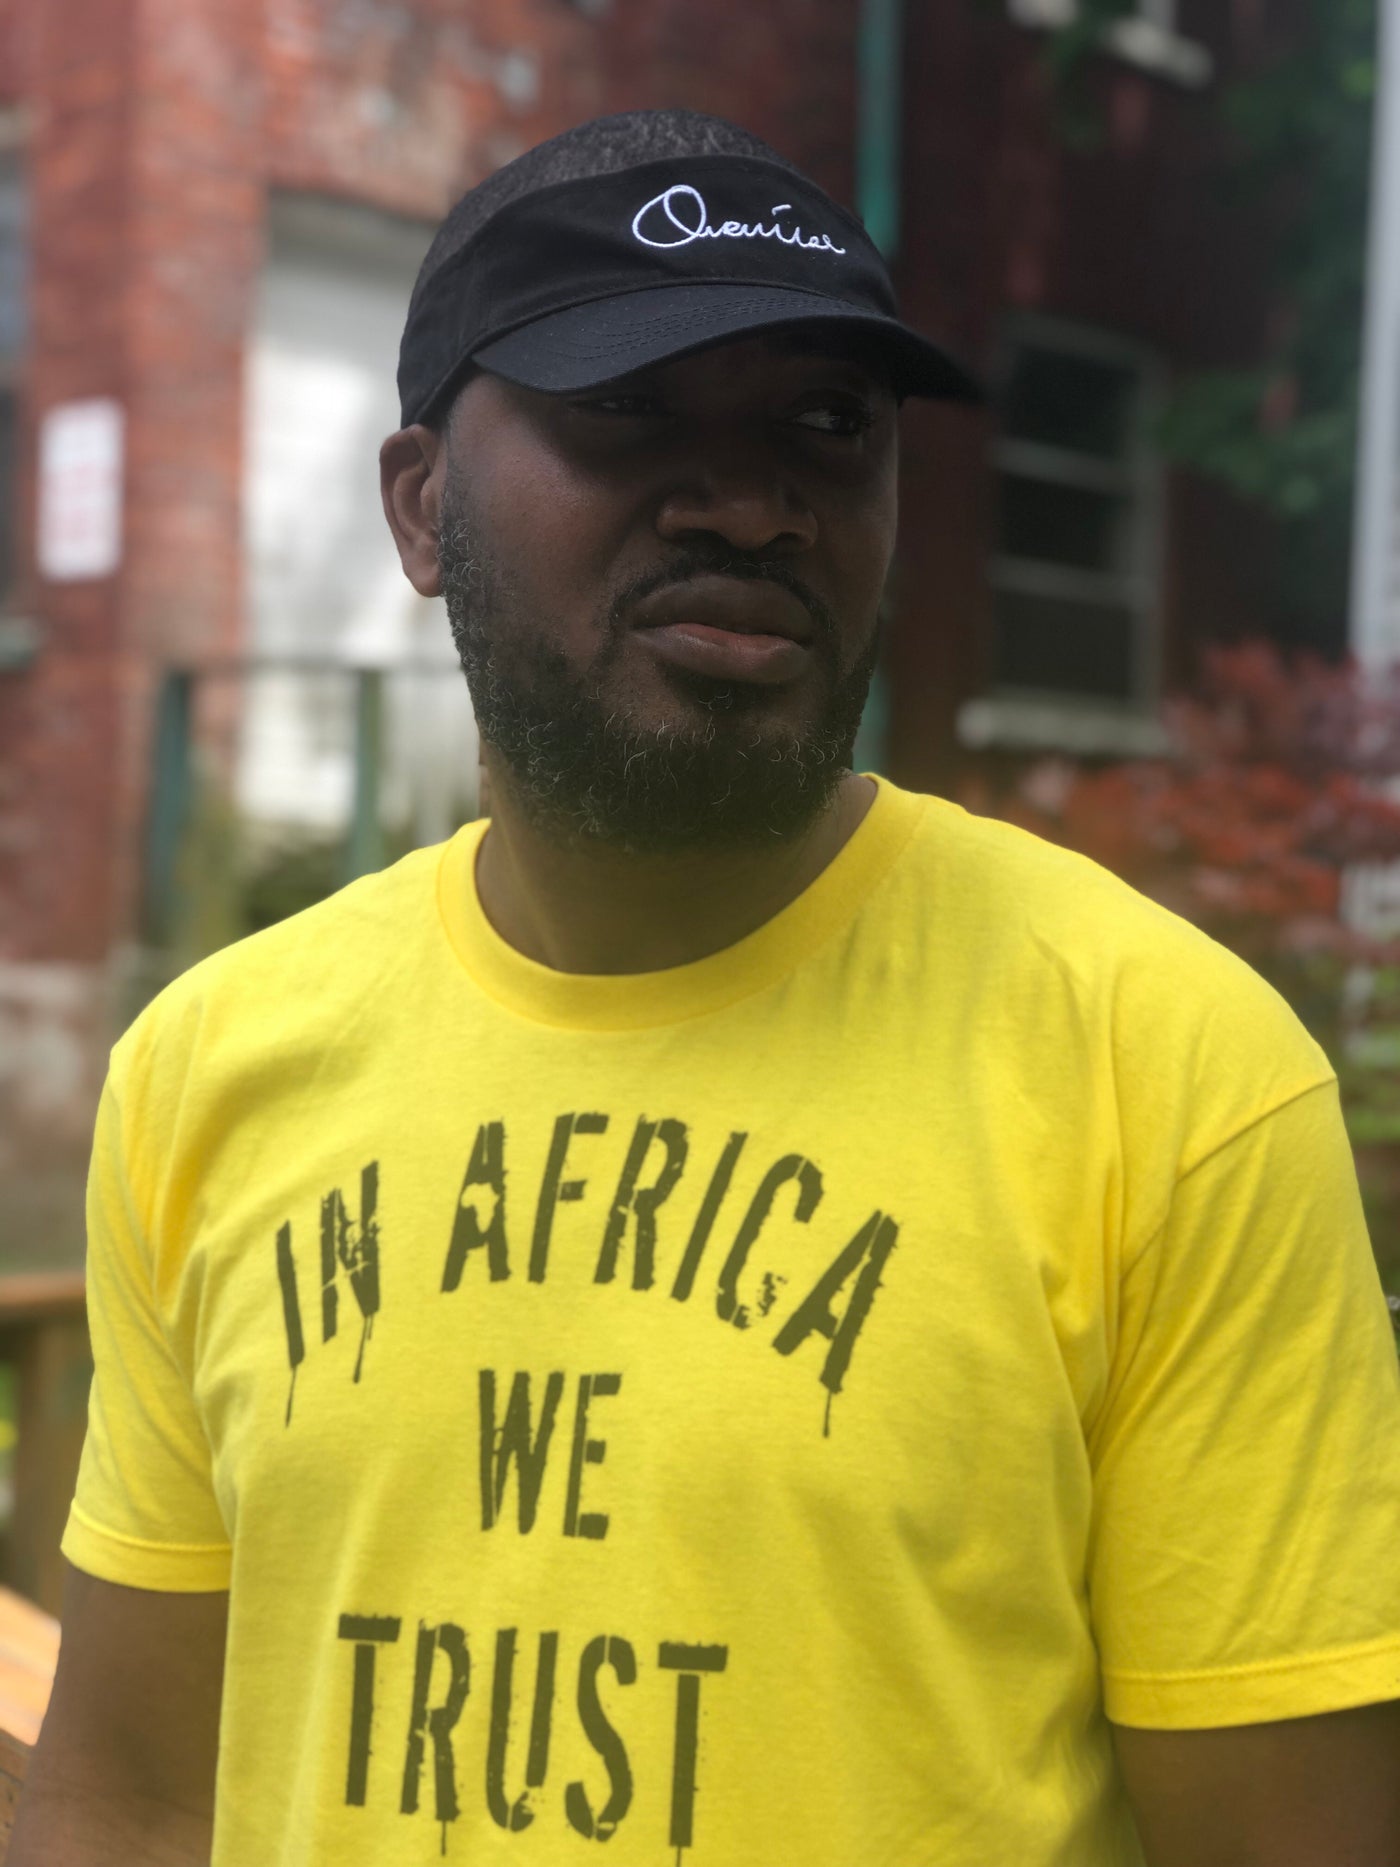 In Africa We Trust T-Shirt